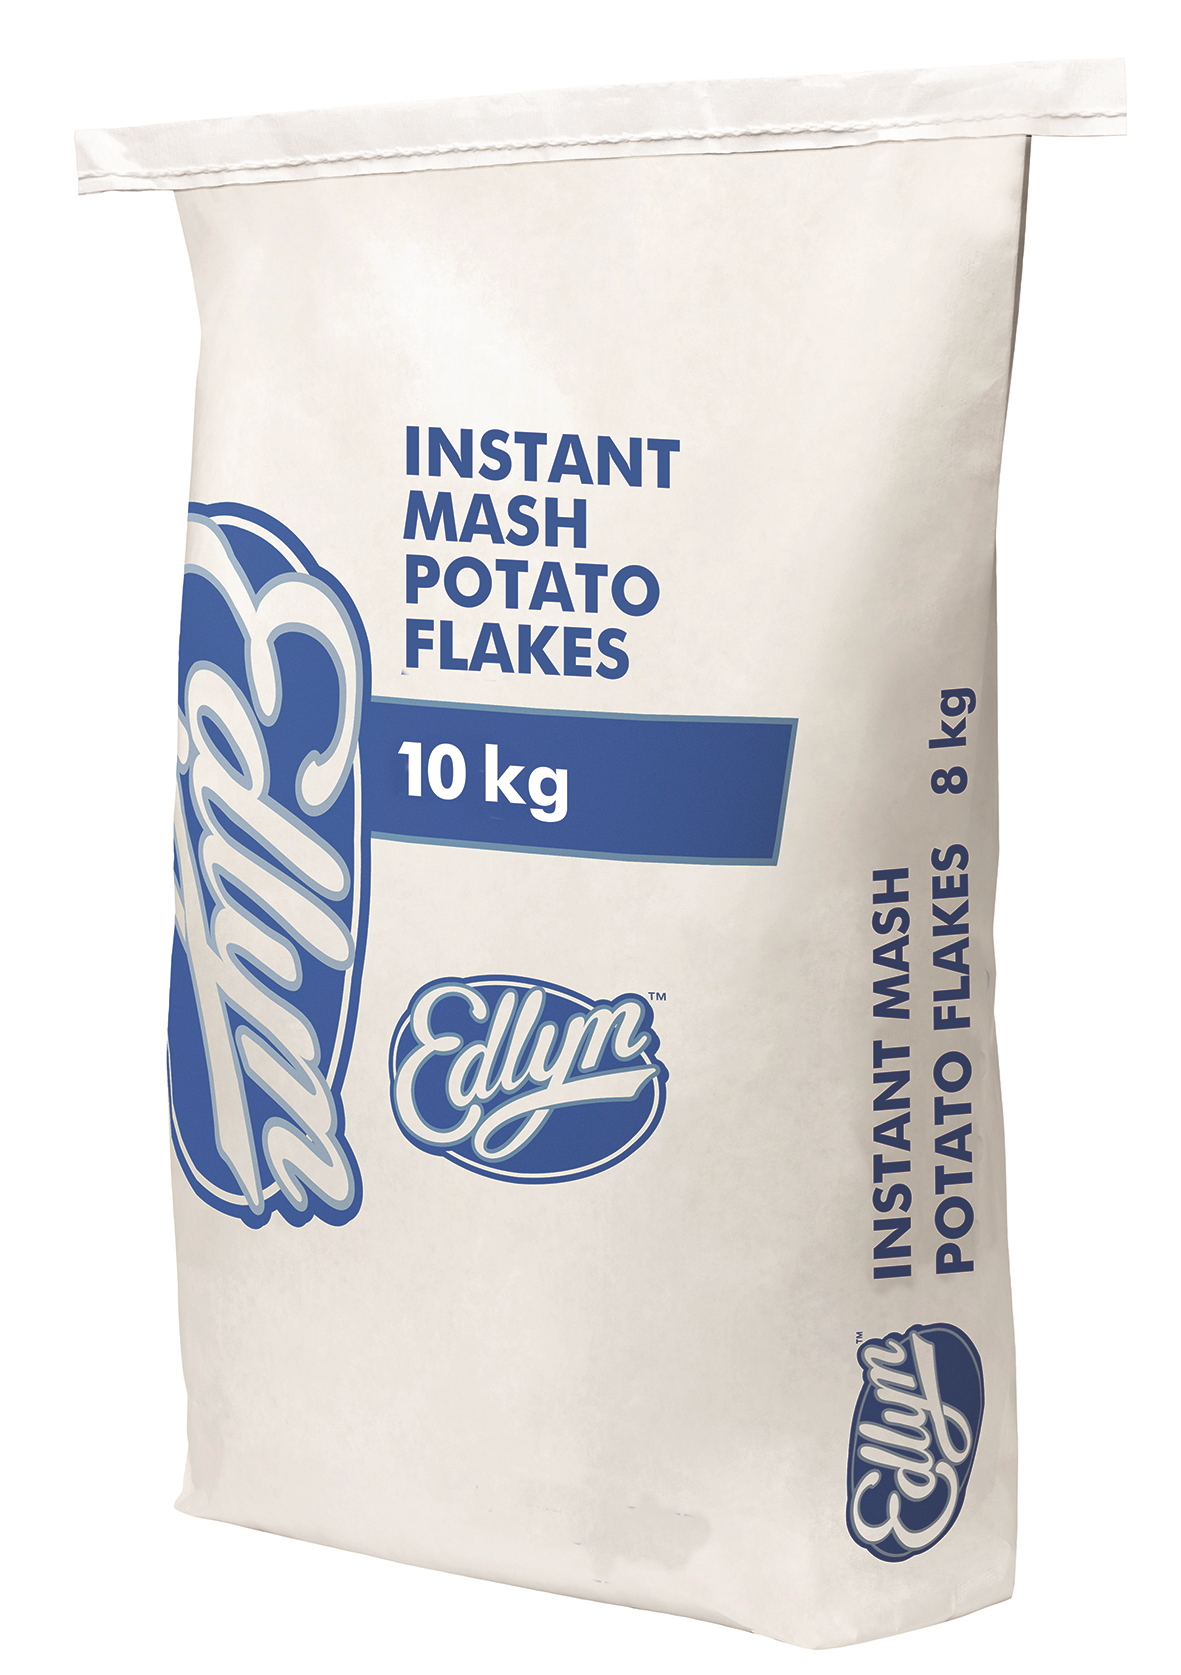 https://edlyn.com.au/wp-content/uploads/2015/05/Instant-Mash-Potato-Flakes-10Kg.jpg